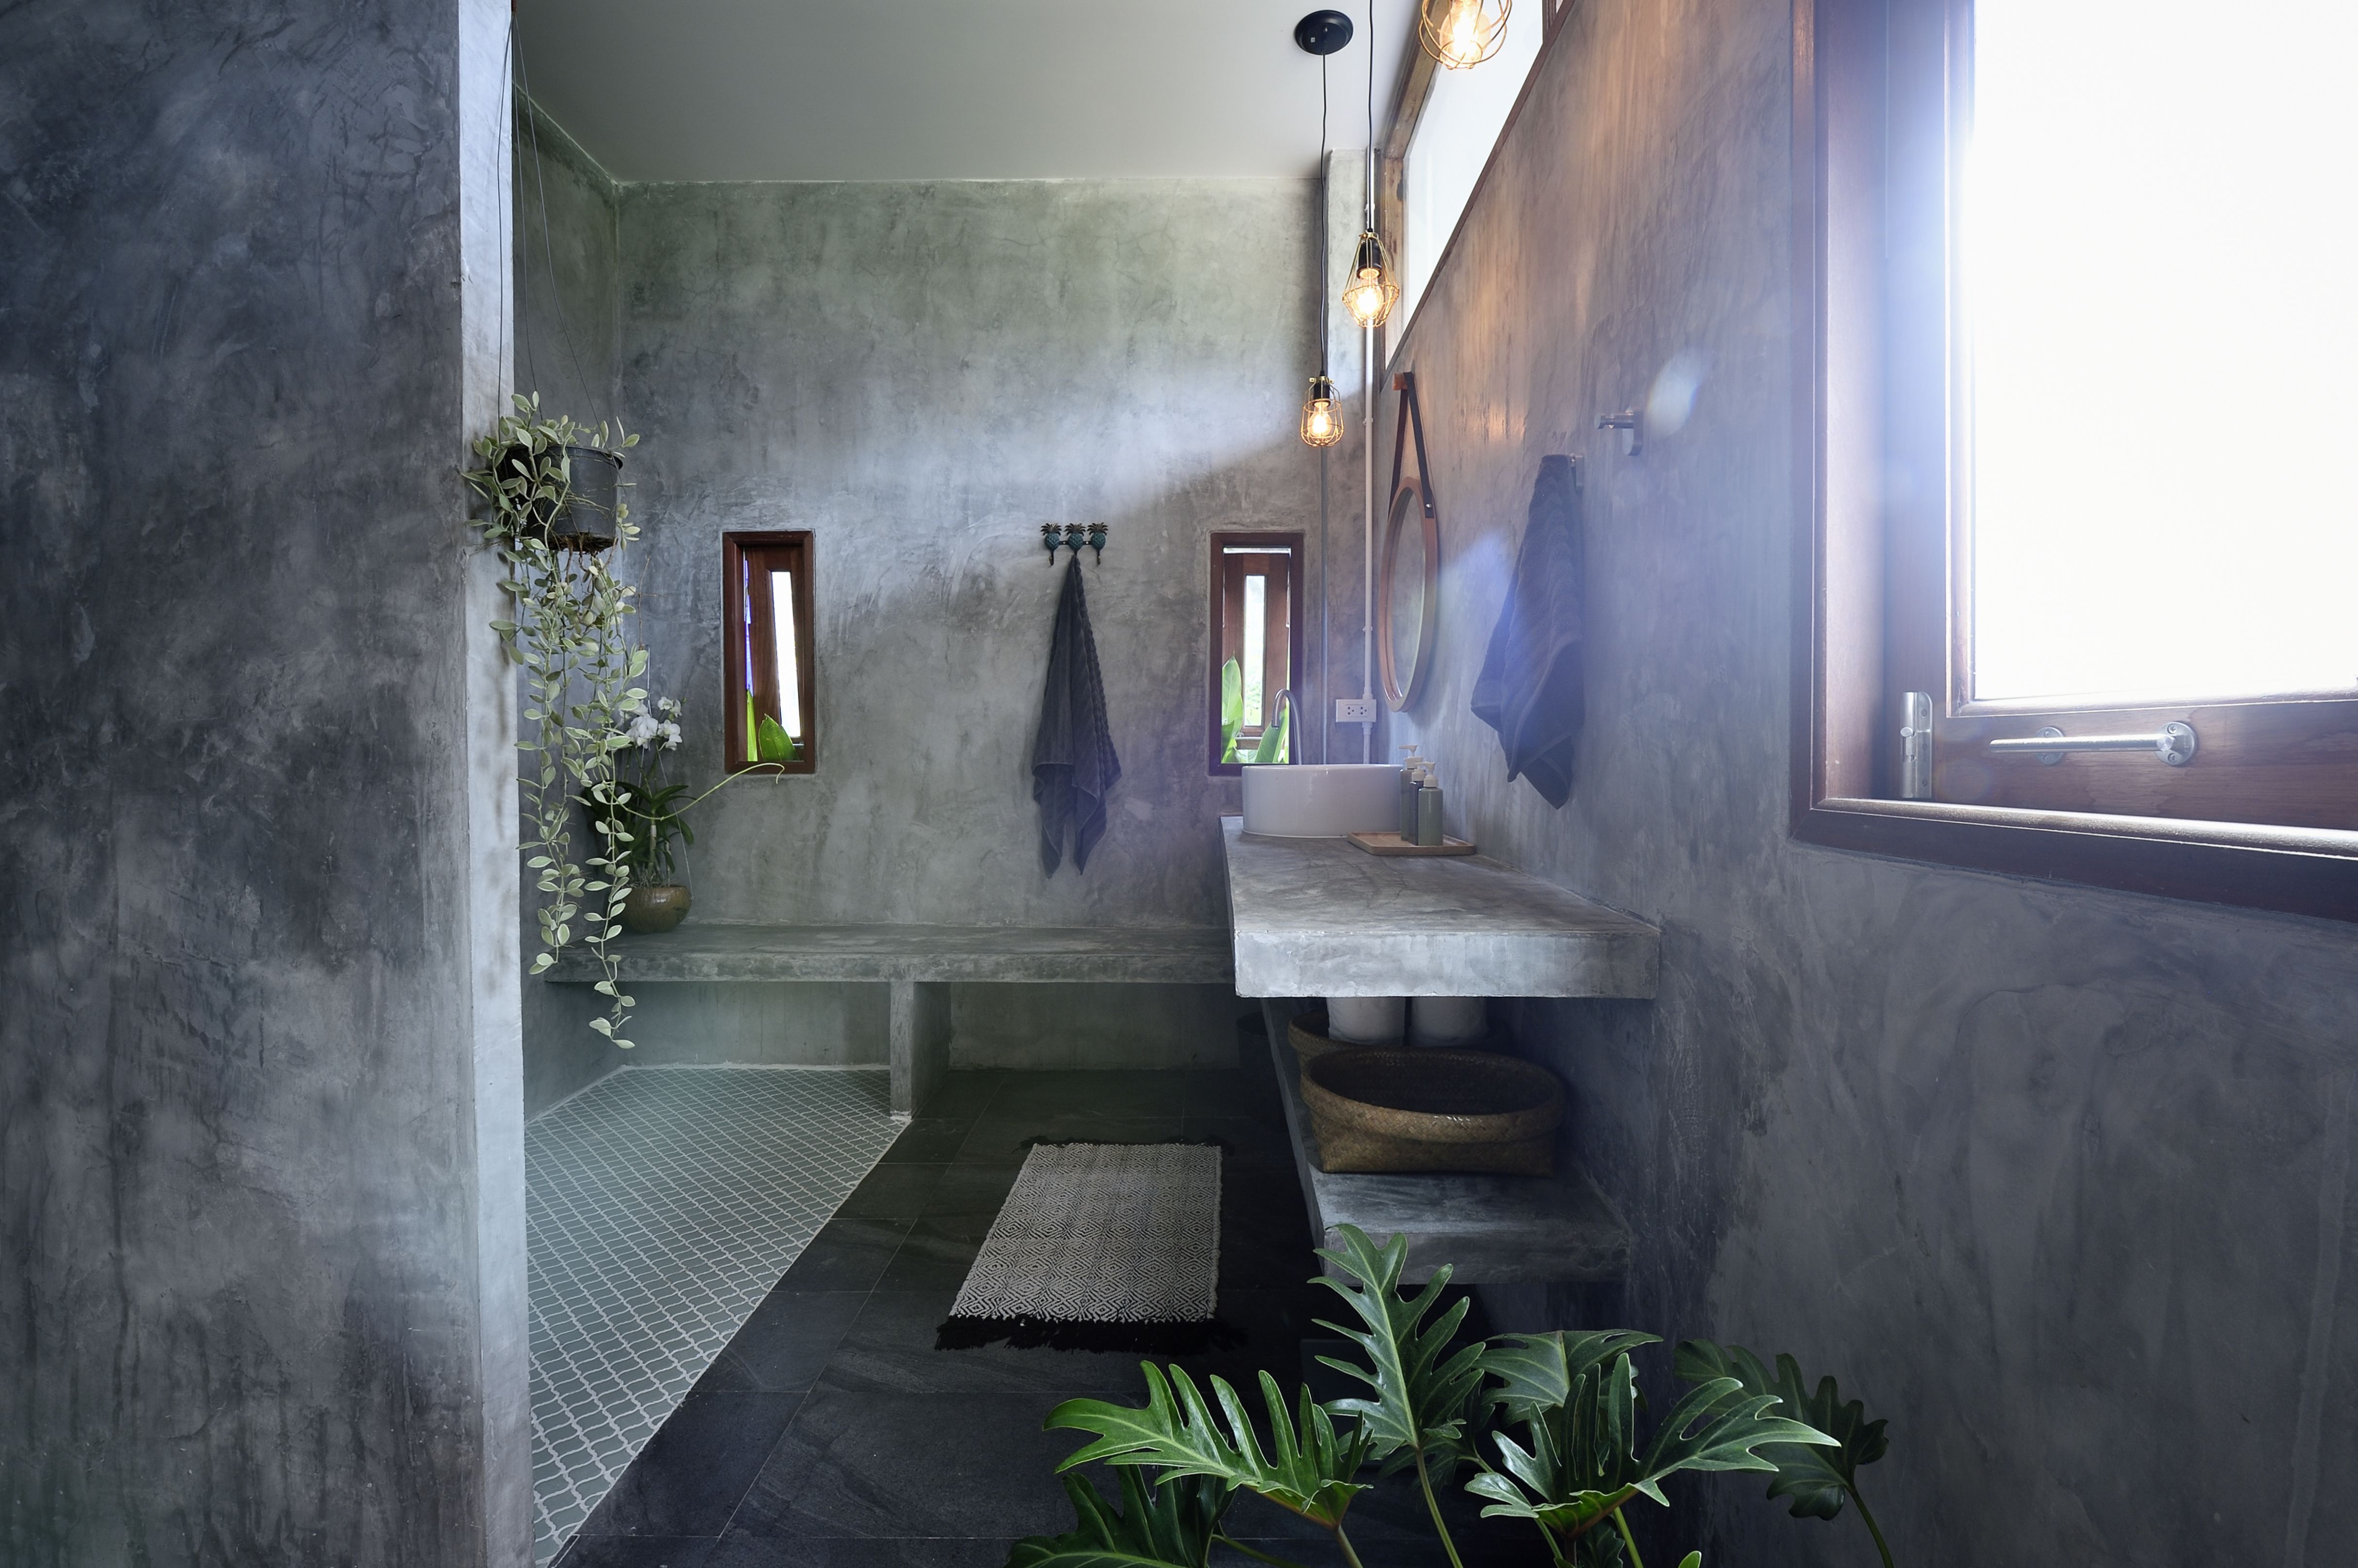 https://hips.hearstapps.com/hmg-prod/images/luxury-concrete-and-tile-bathroom-royalty-free-image-1652816976.jpg